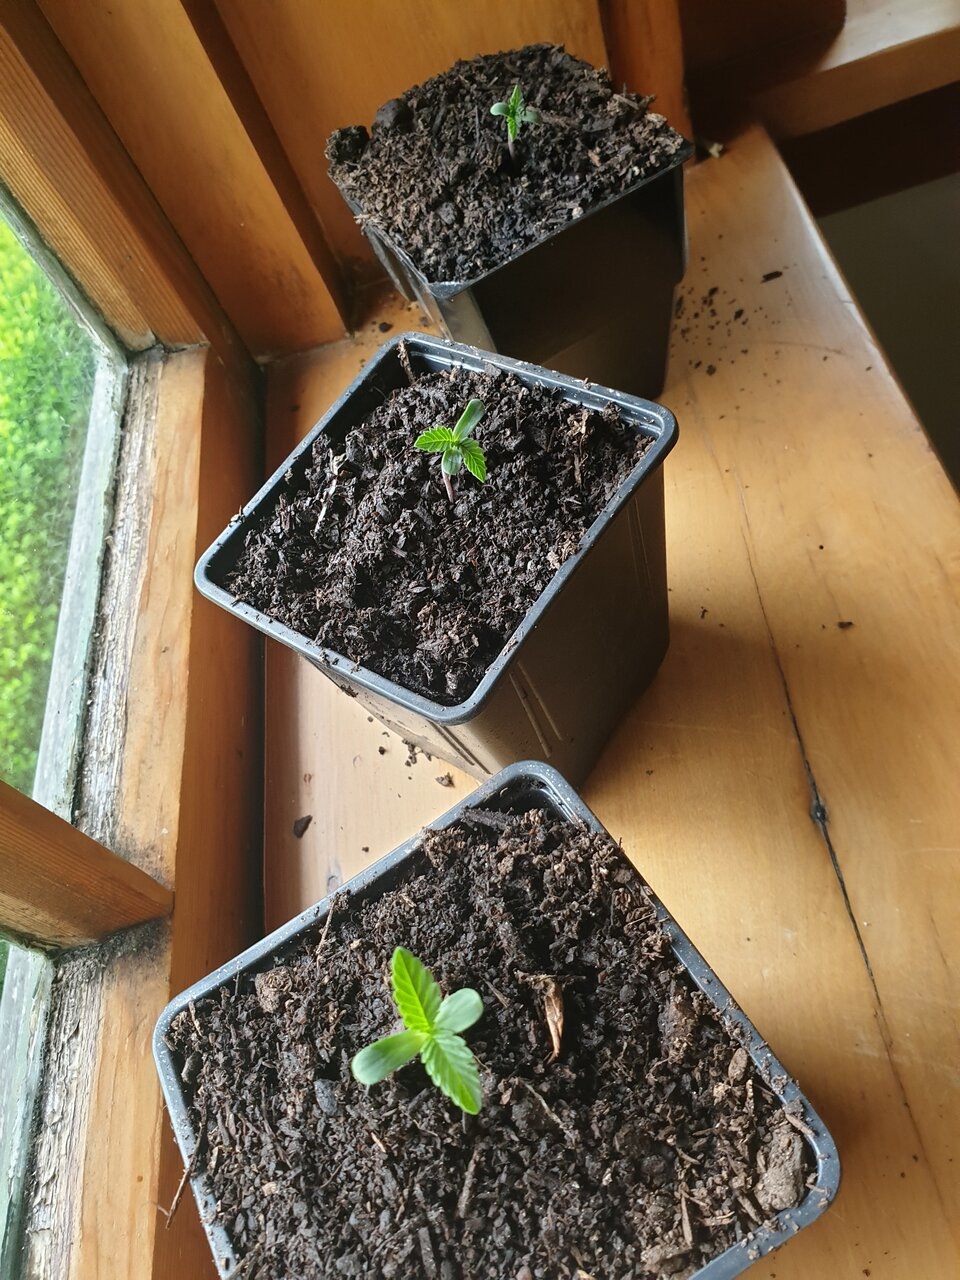 3 plants transferred from terrarium